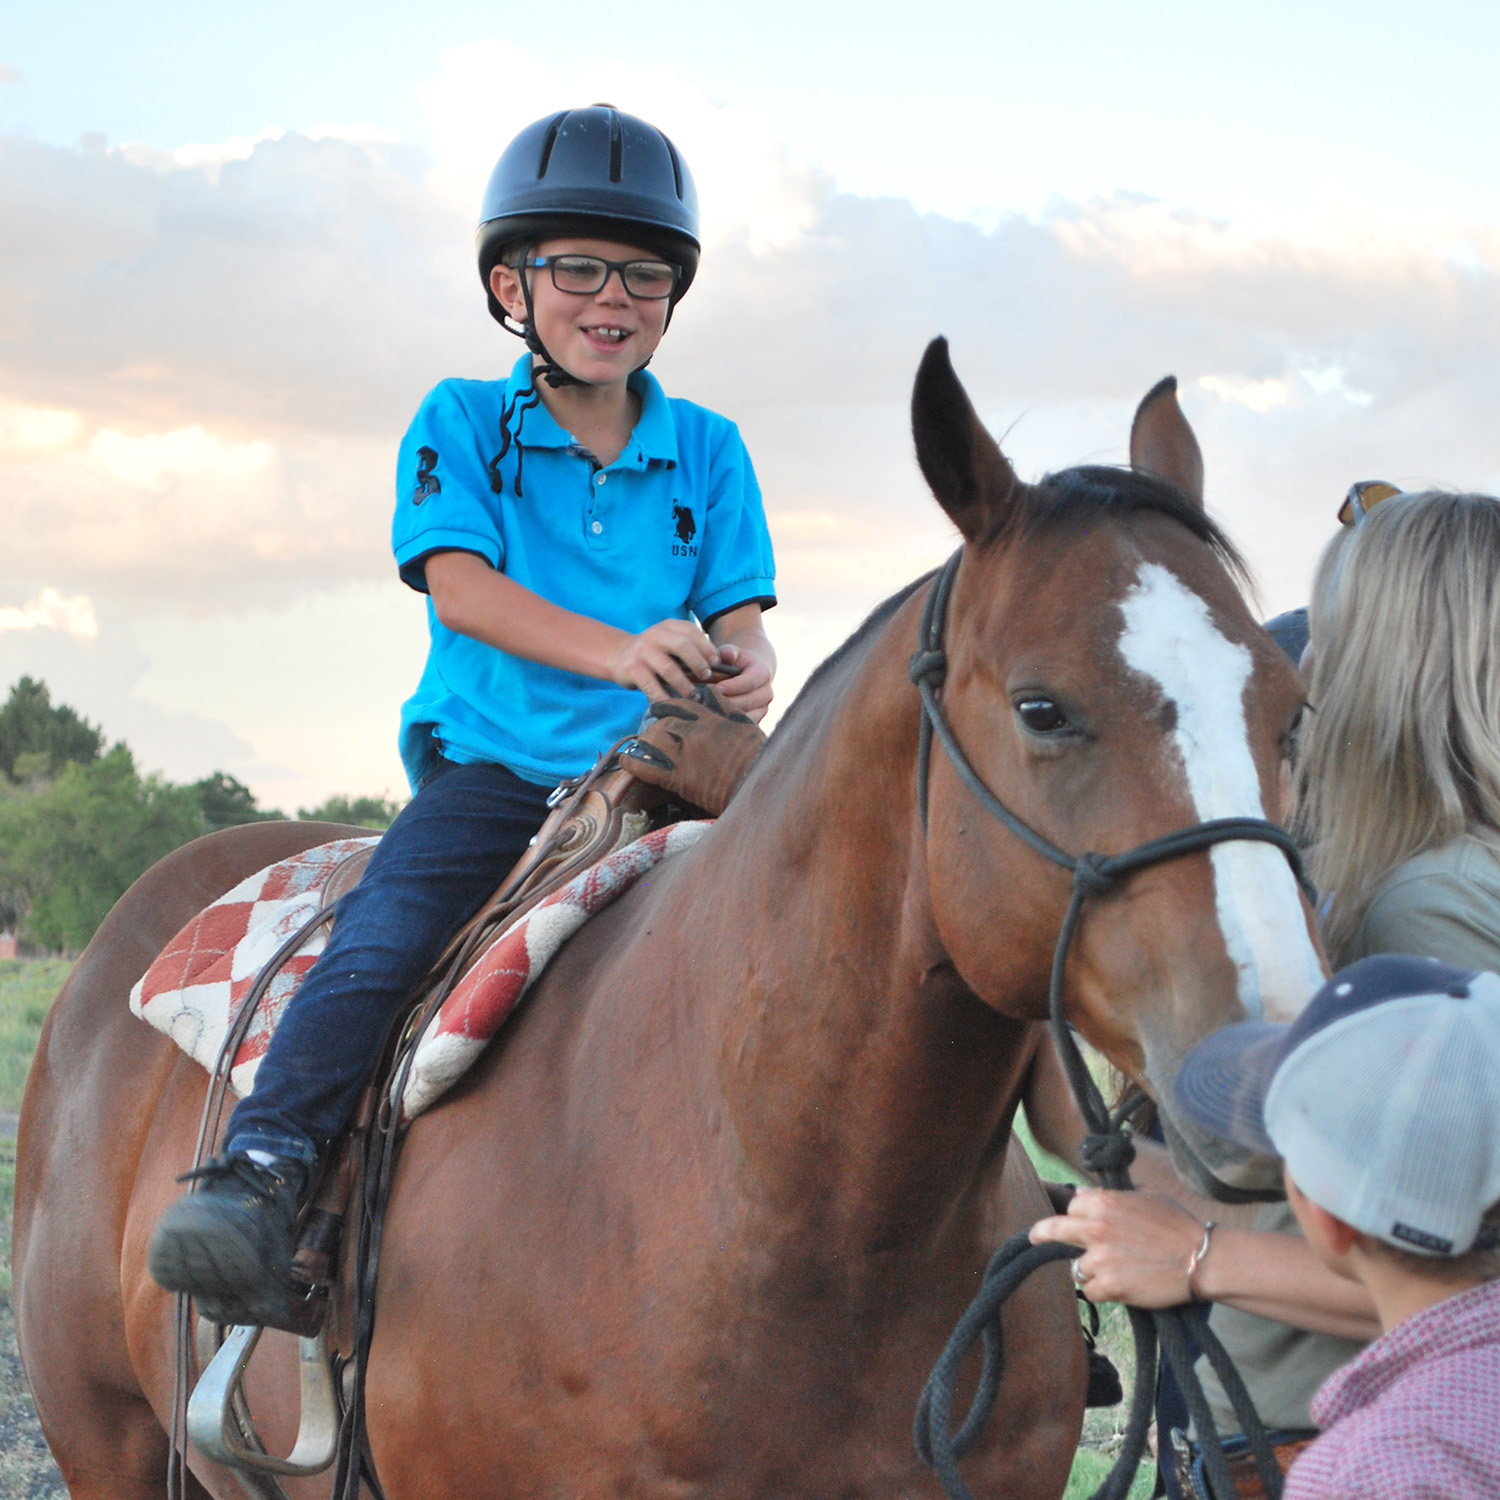 a boy in a helmet rides a horse